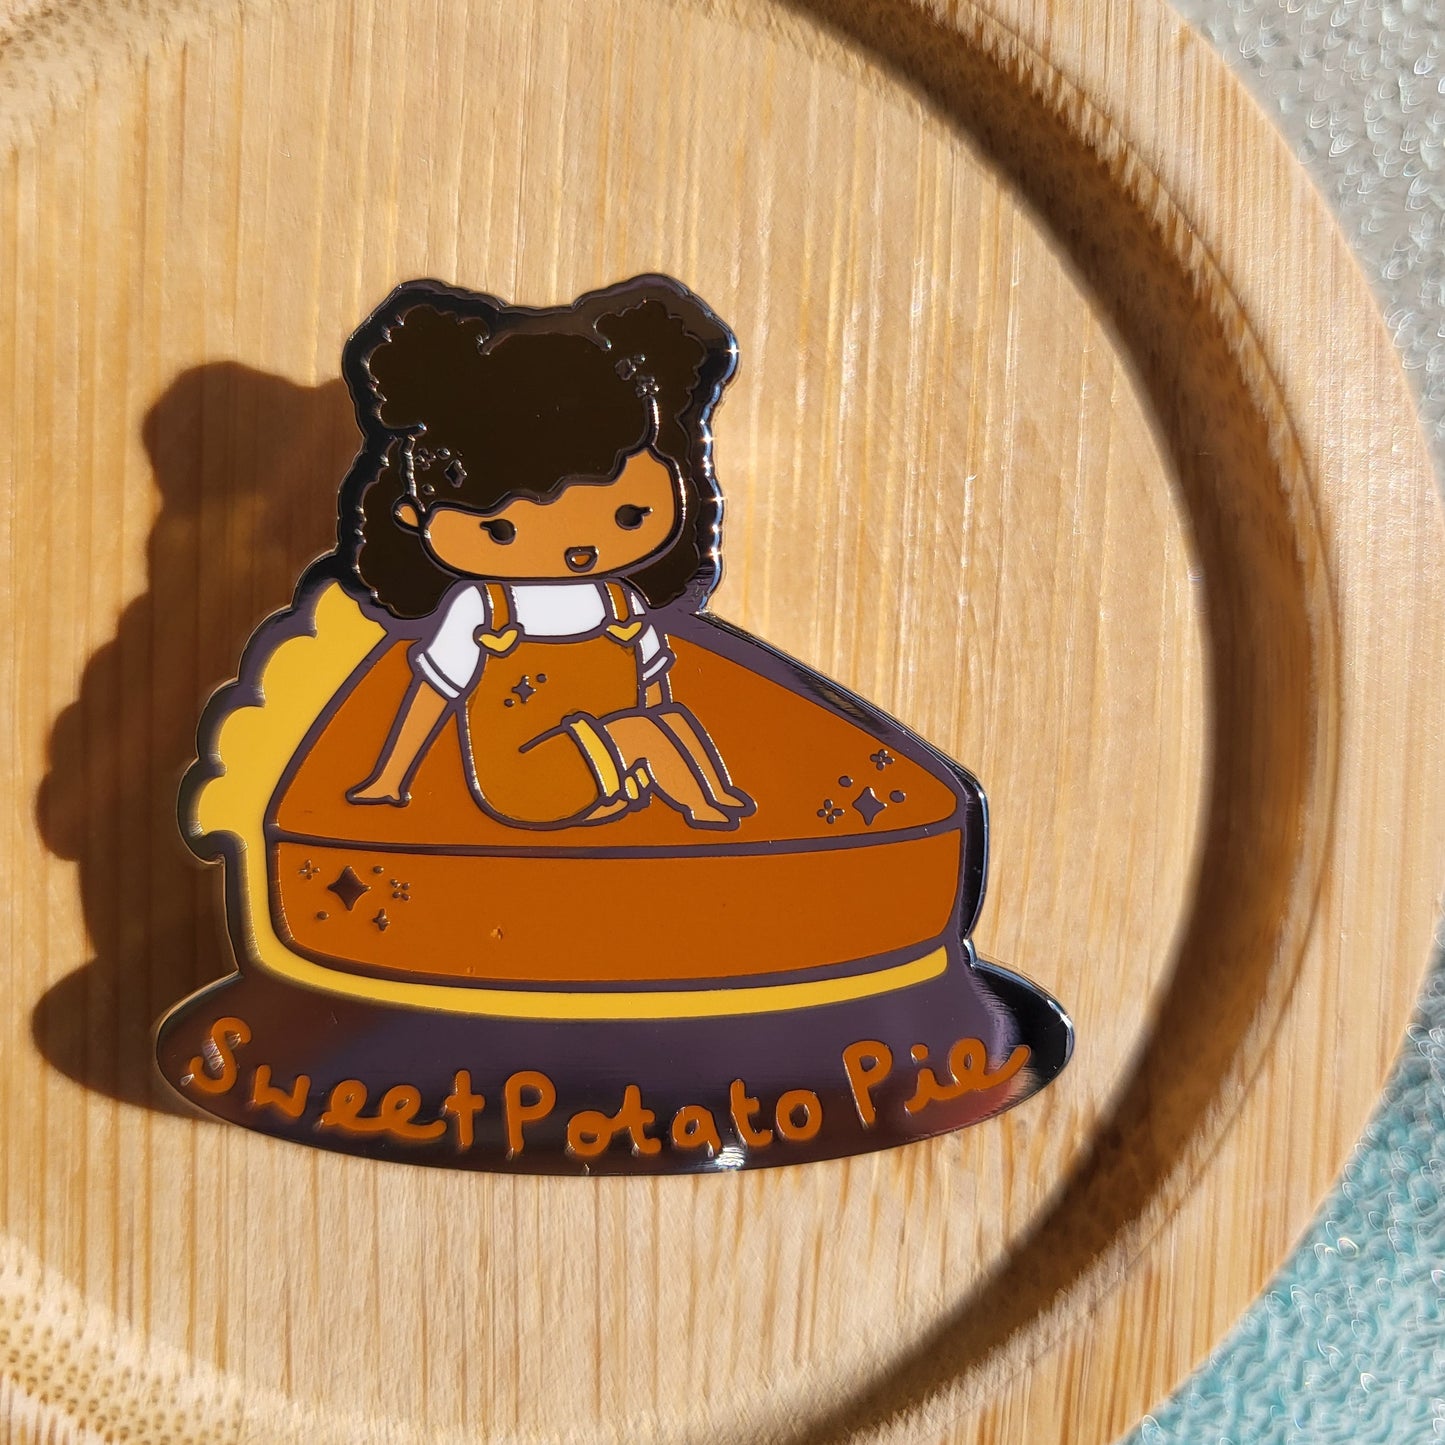 Hard Silver Enamel Pin with "Sweet Potato Pie" text